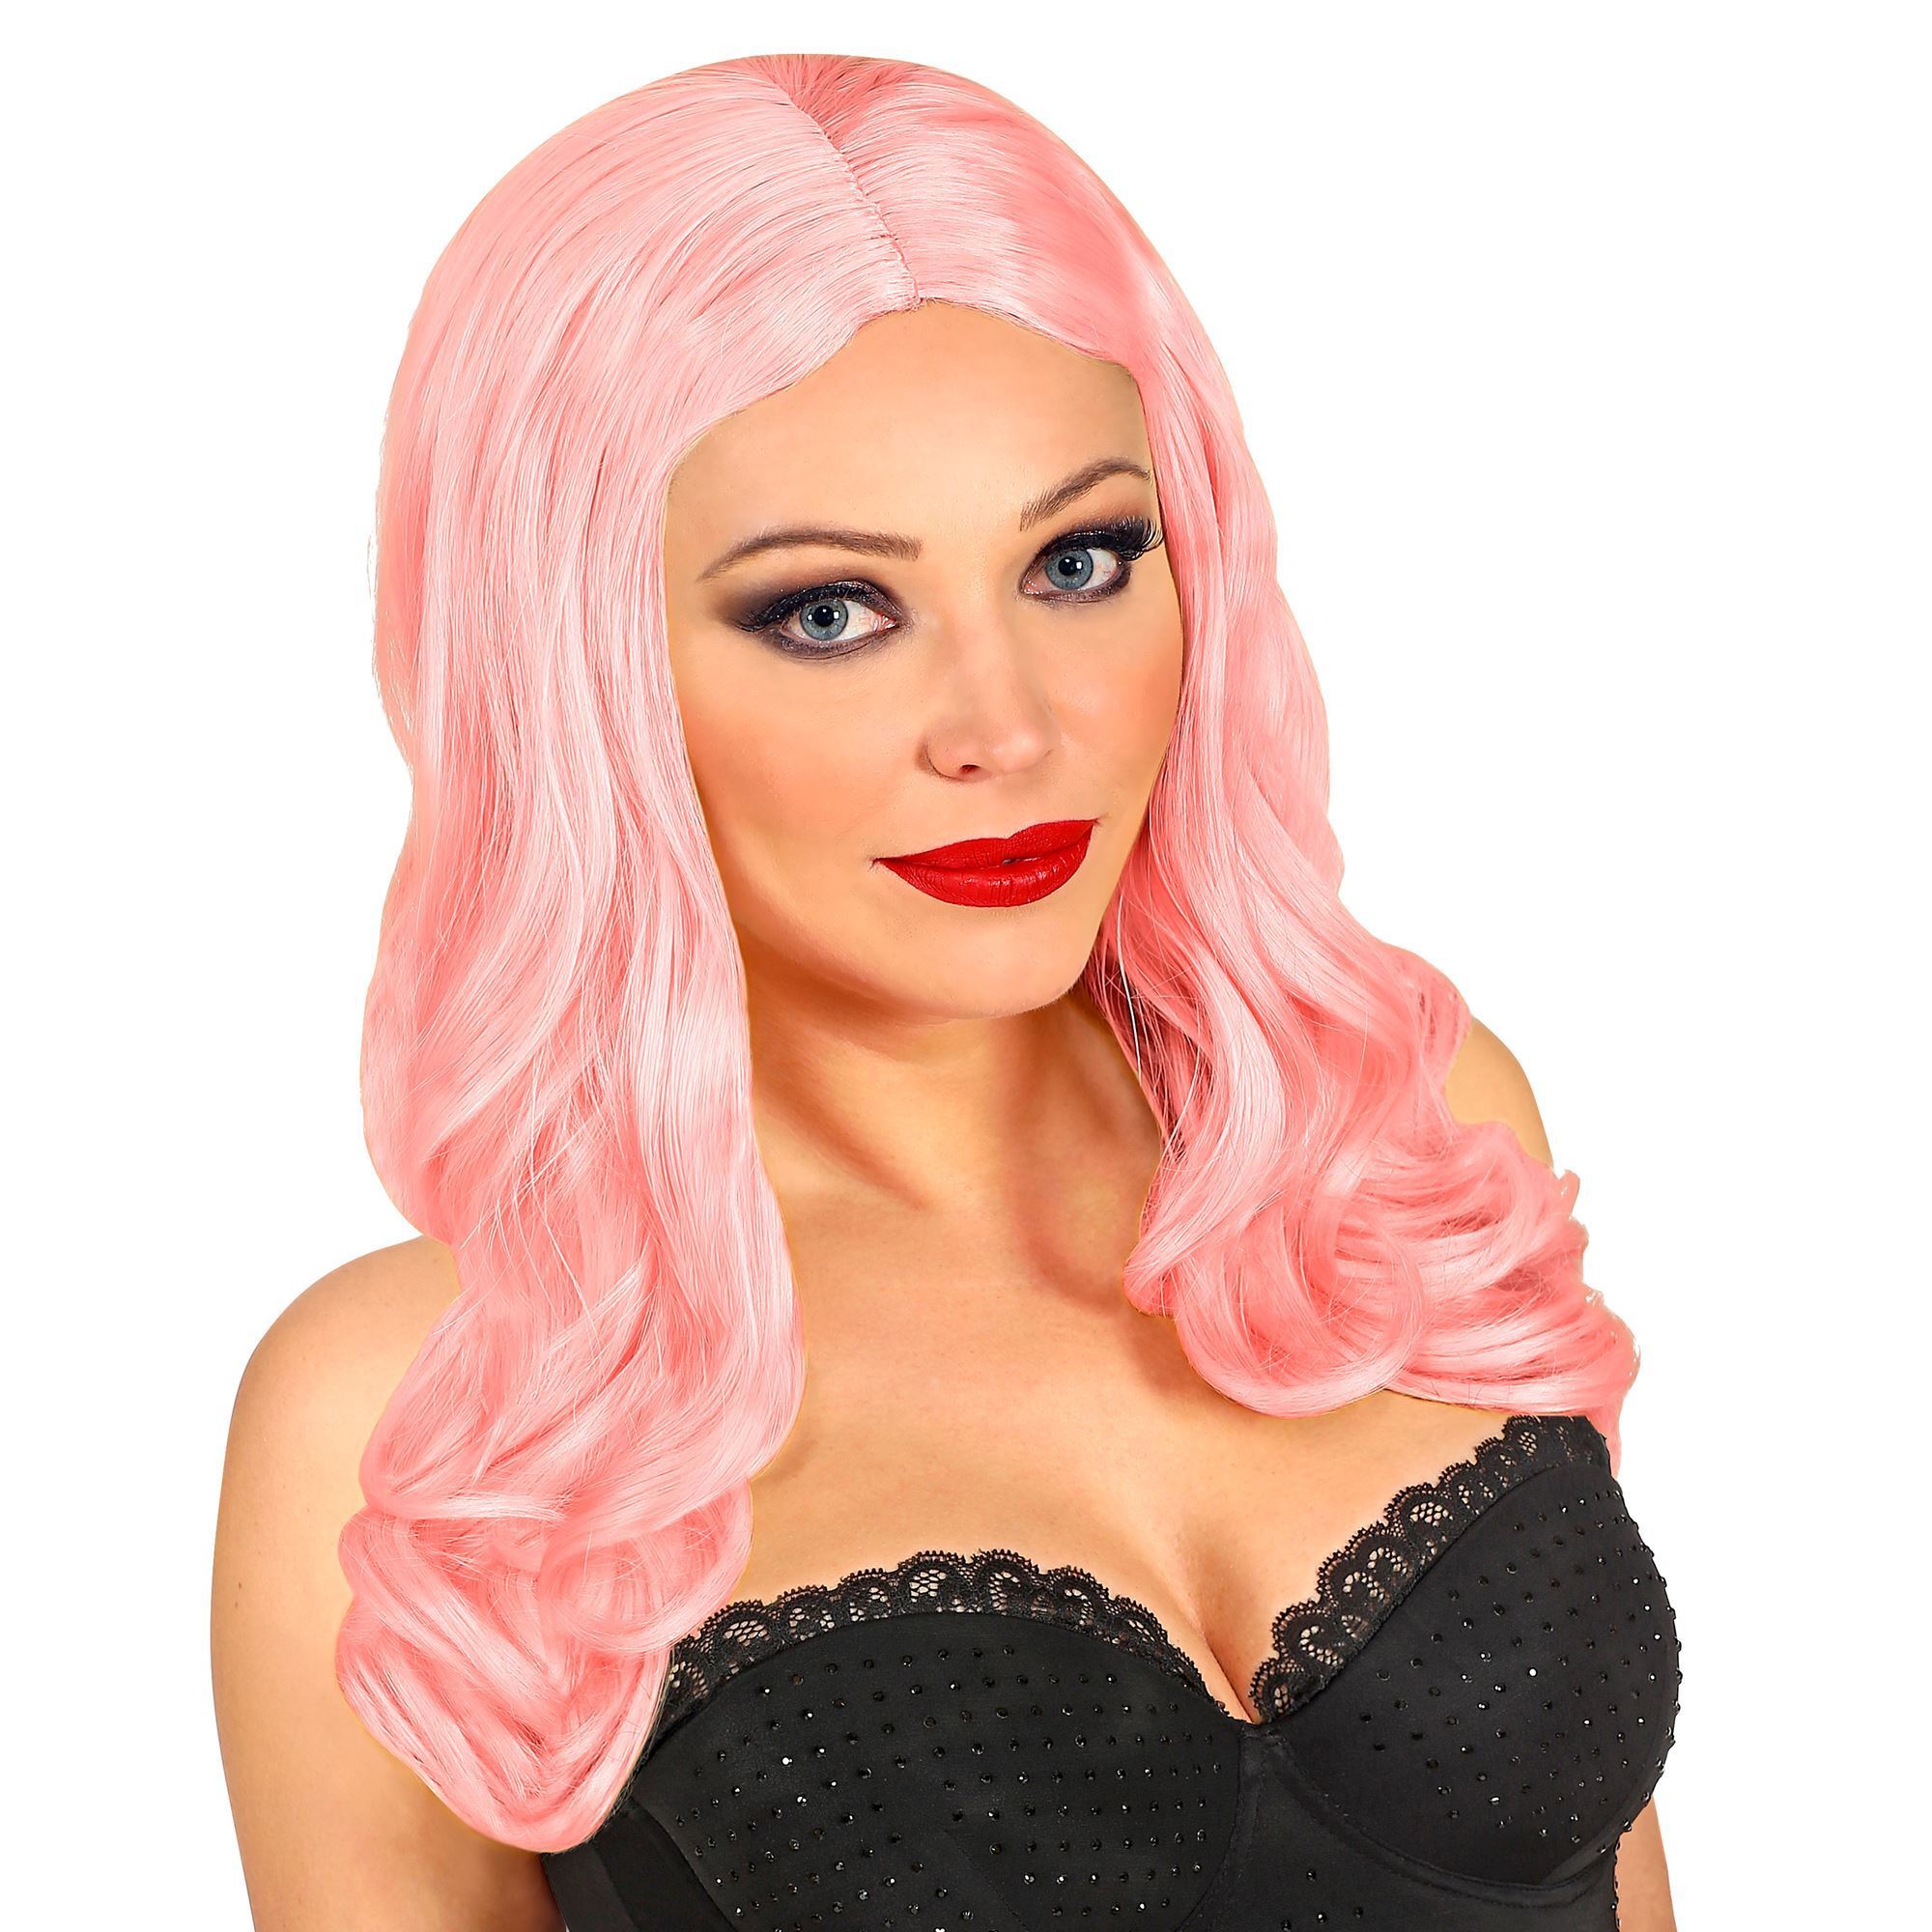 Roxy pruik oud roze lang haar